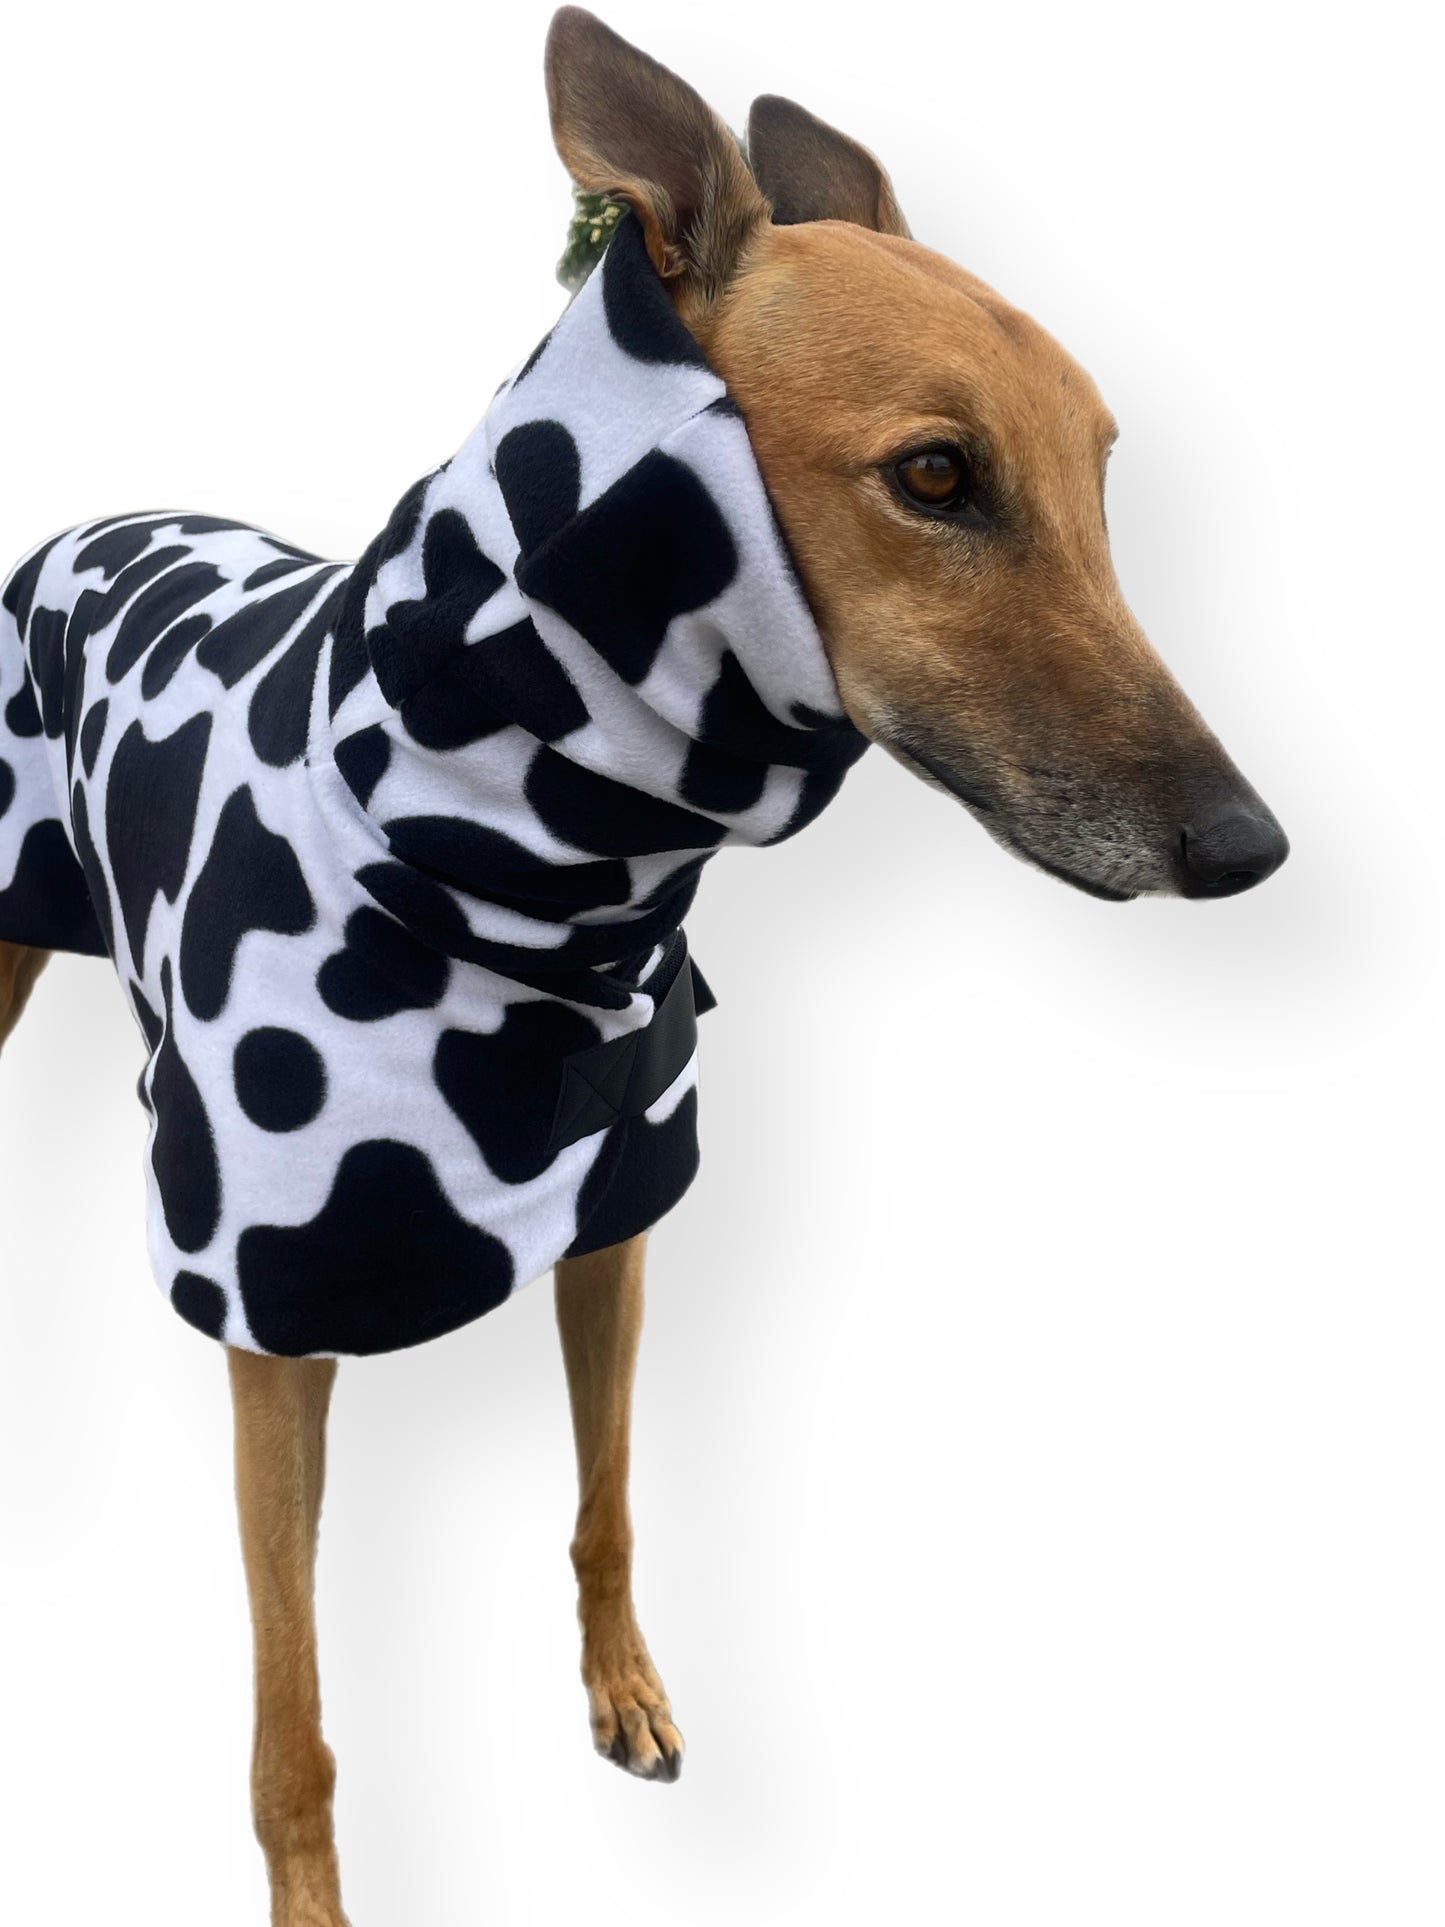 Autumn range greyhound classic style Greyhound ‘cow print’ coat double fleece washable